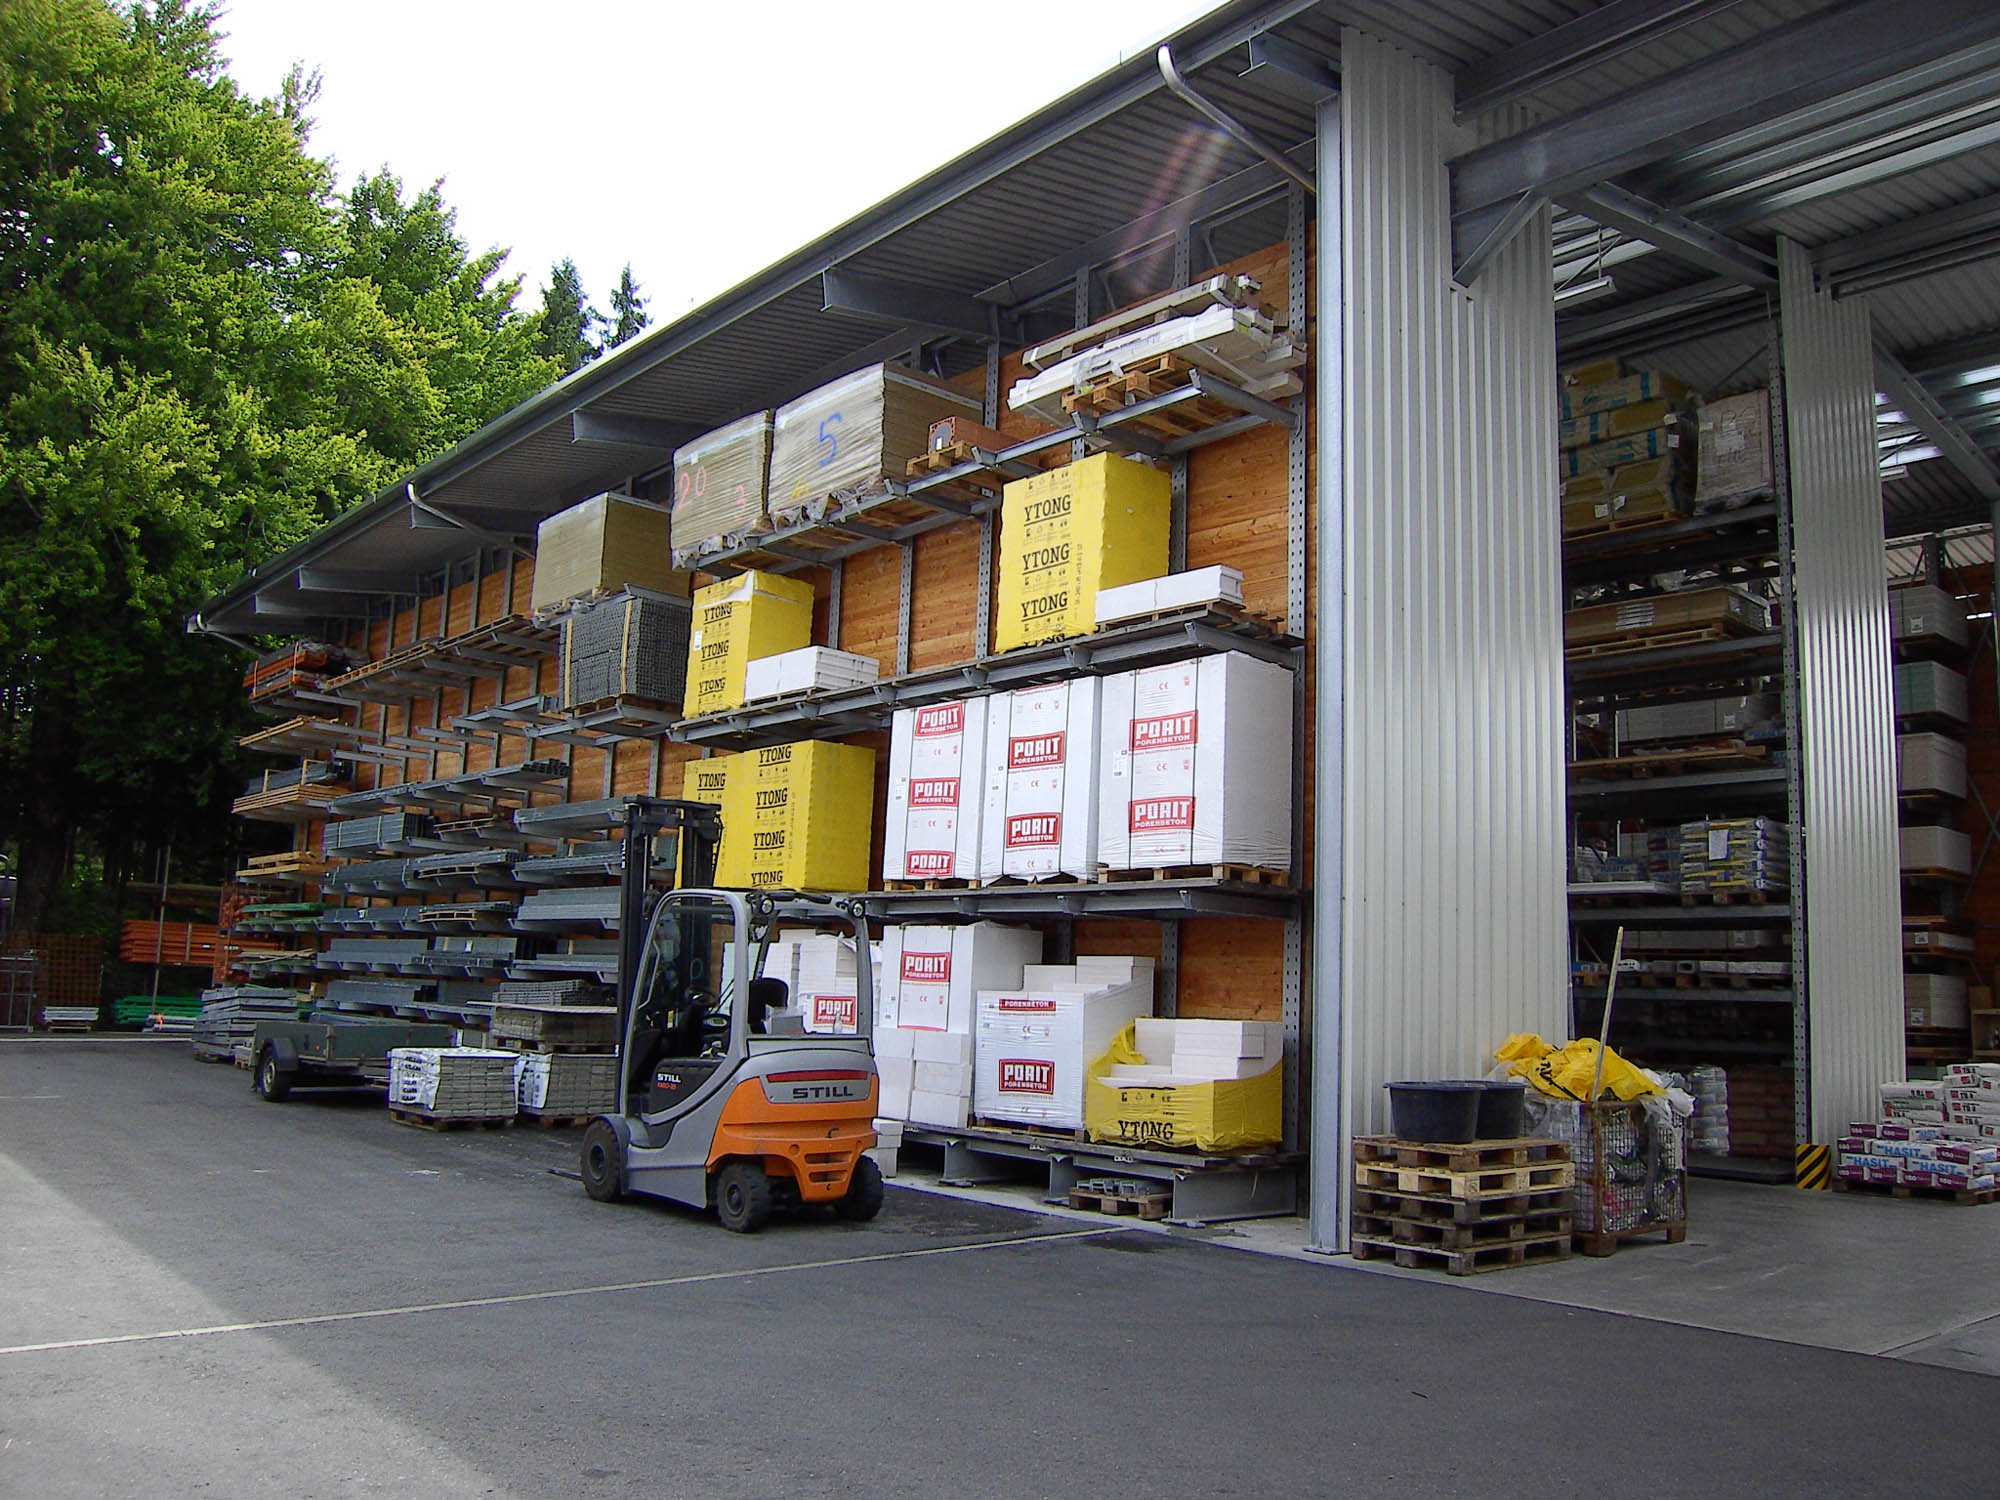 rack-clad warehouse, building industry